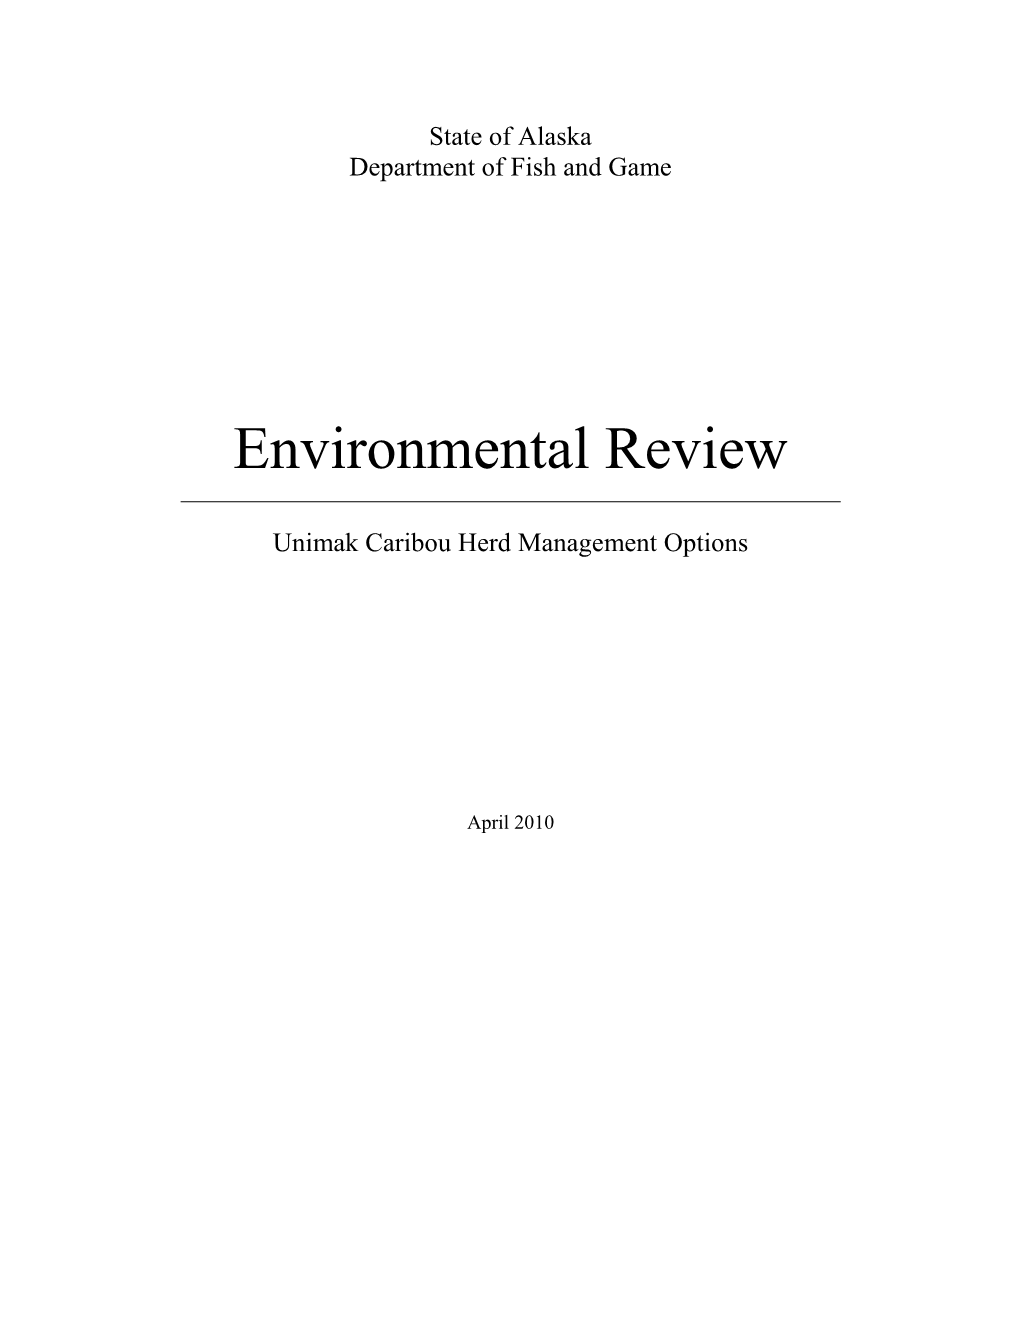 Environmental Review: Unimak Caribou Herd Management Options